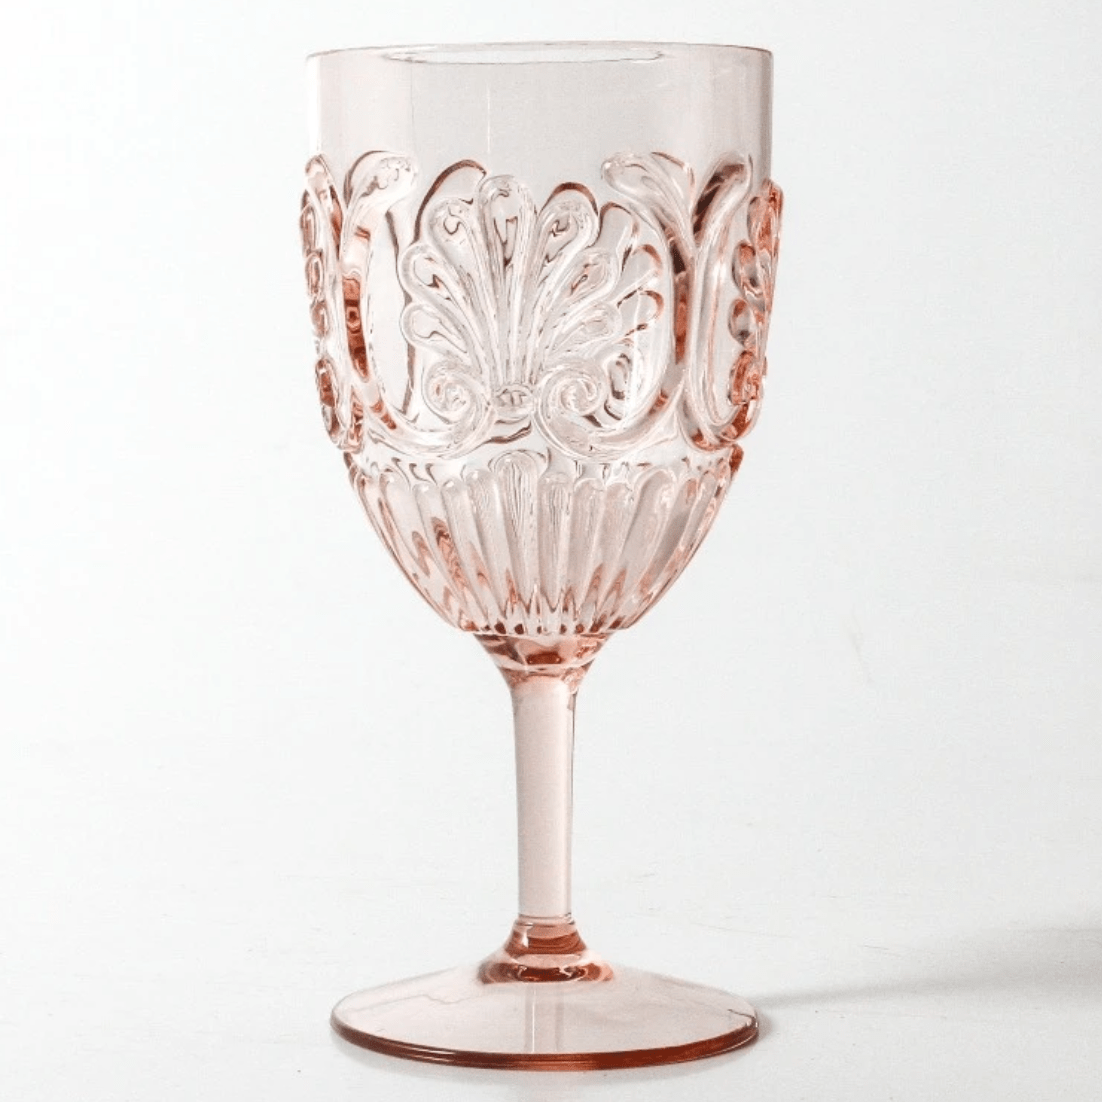 Flemington Acrylic Wine Glass - Pink House of Dudley